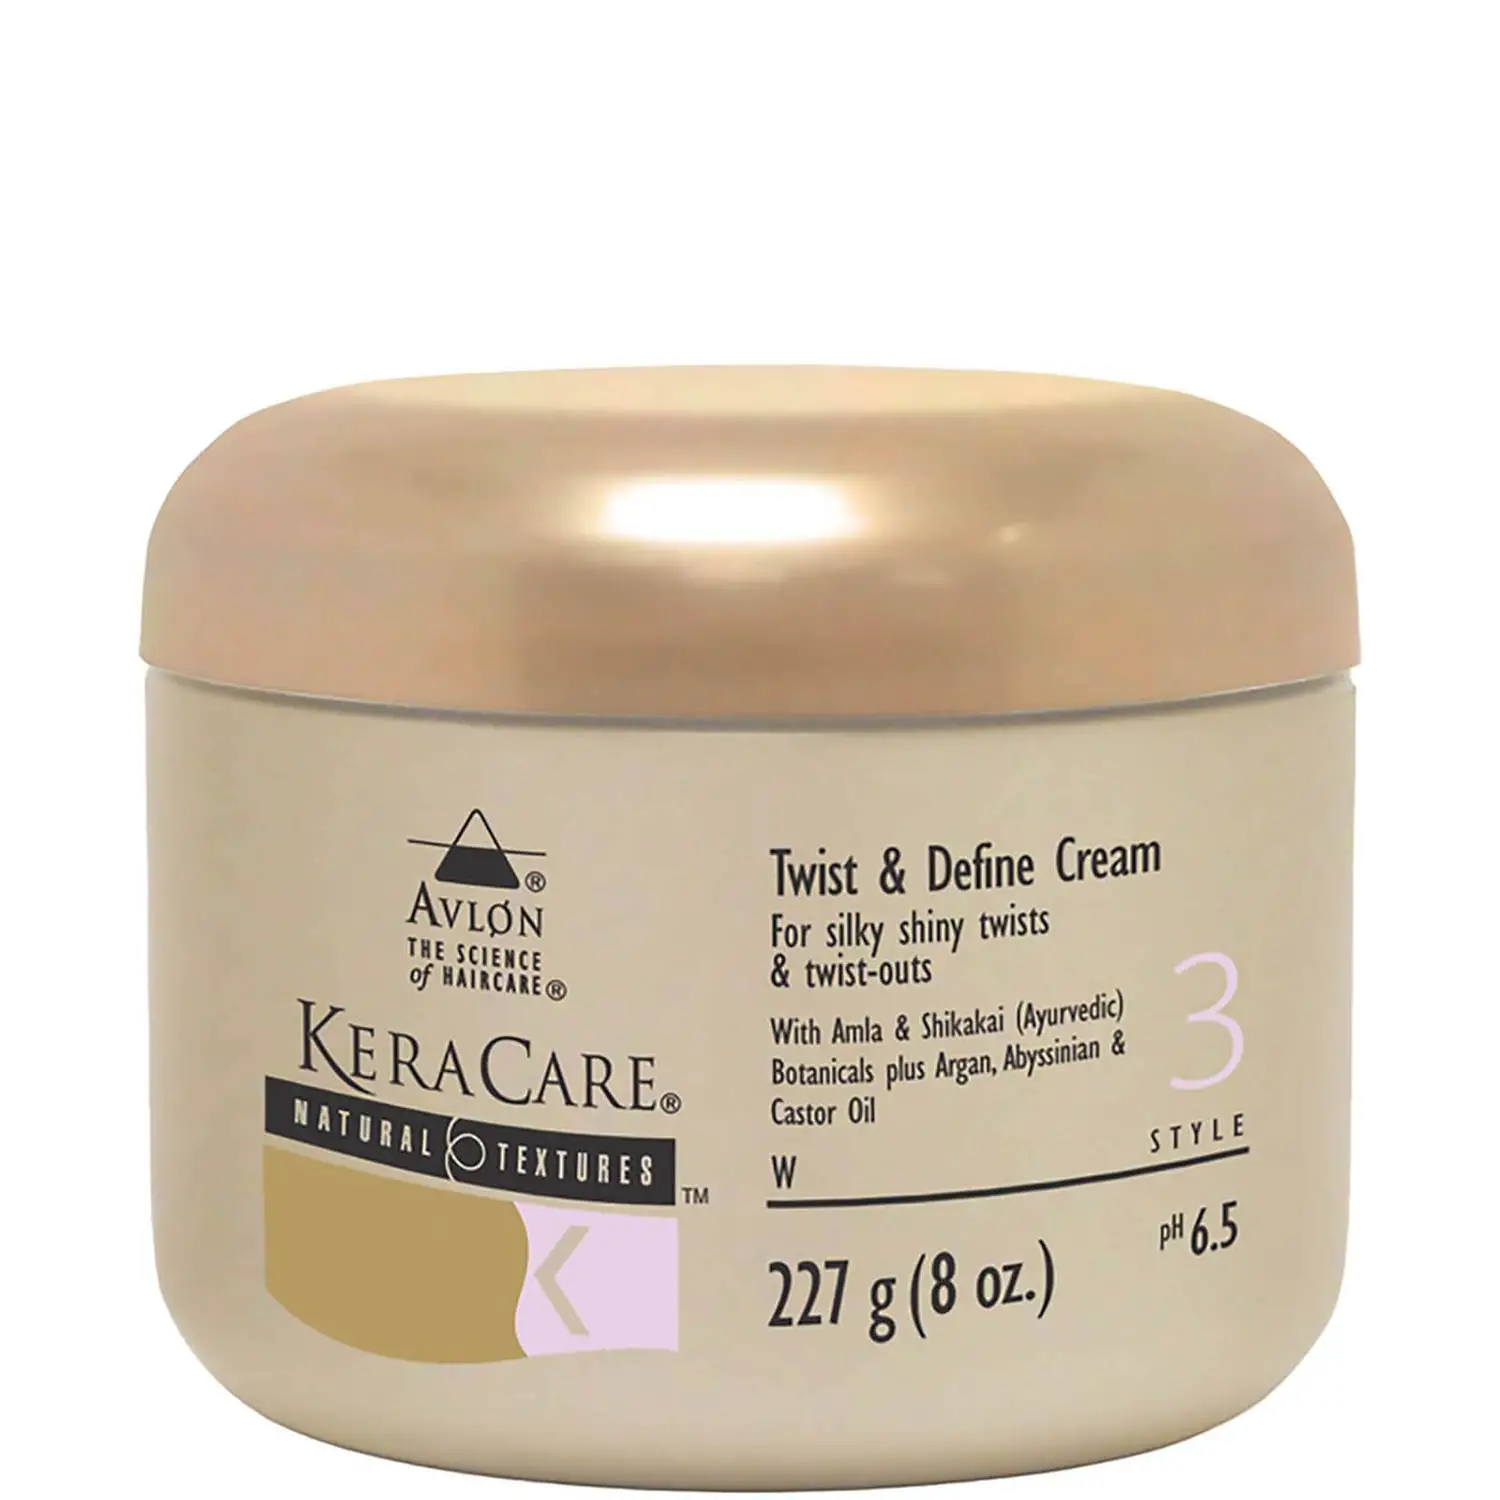 Keracare Natural Textures Twist & Define Cream